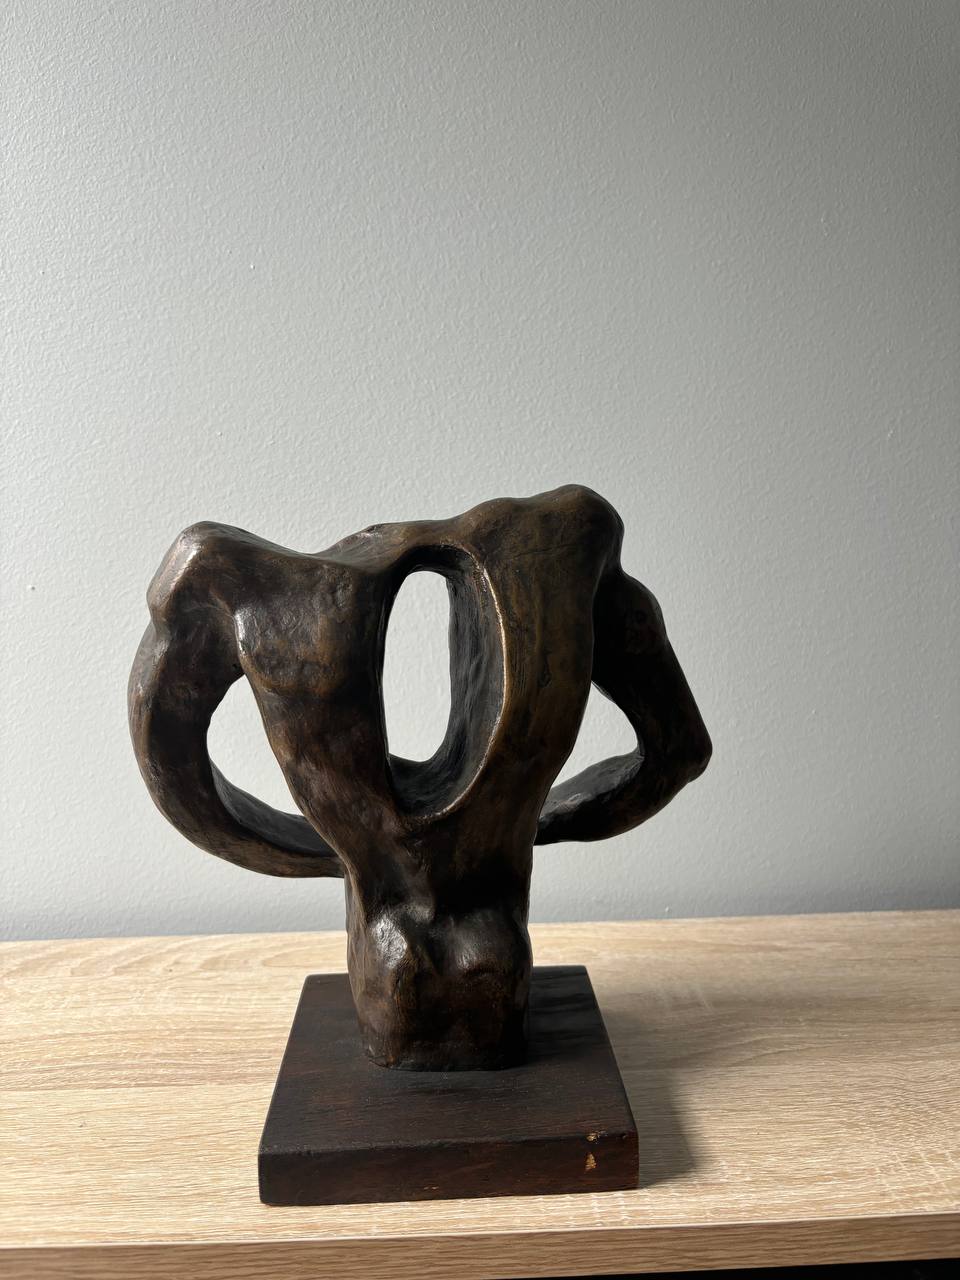 Ernst Neizvestny - Bronze sculpture "Torso" ("Clasped hands"), 1960s - Bronze, Ernst Neizvestny, Sculpture - Hedonism Gallery